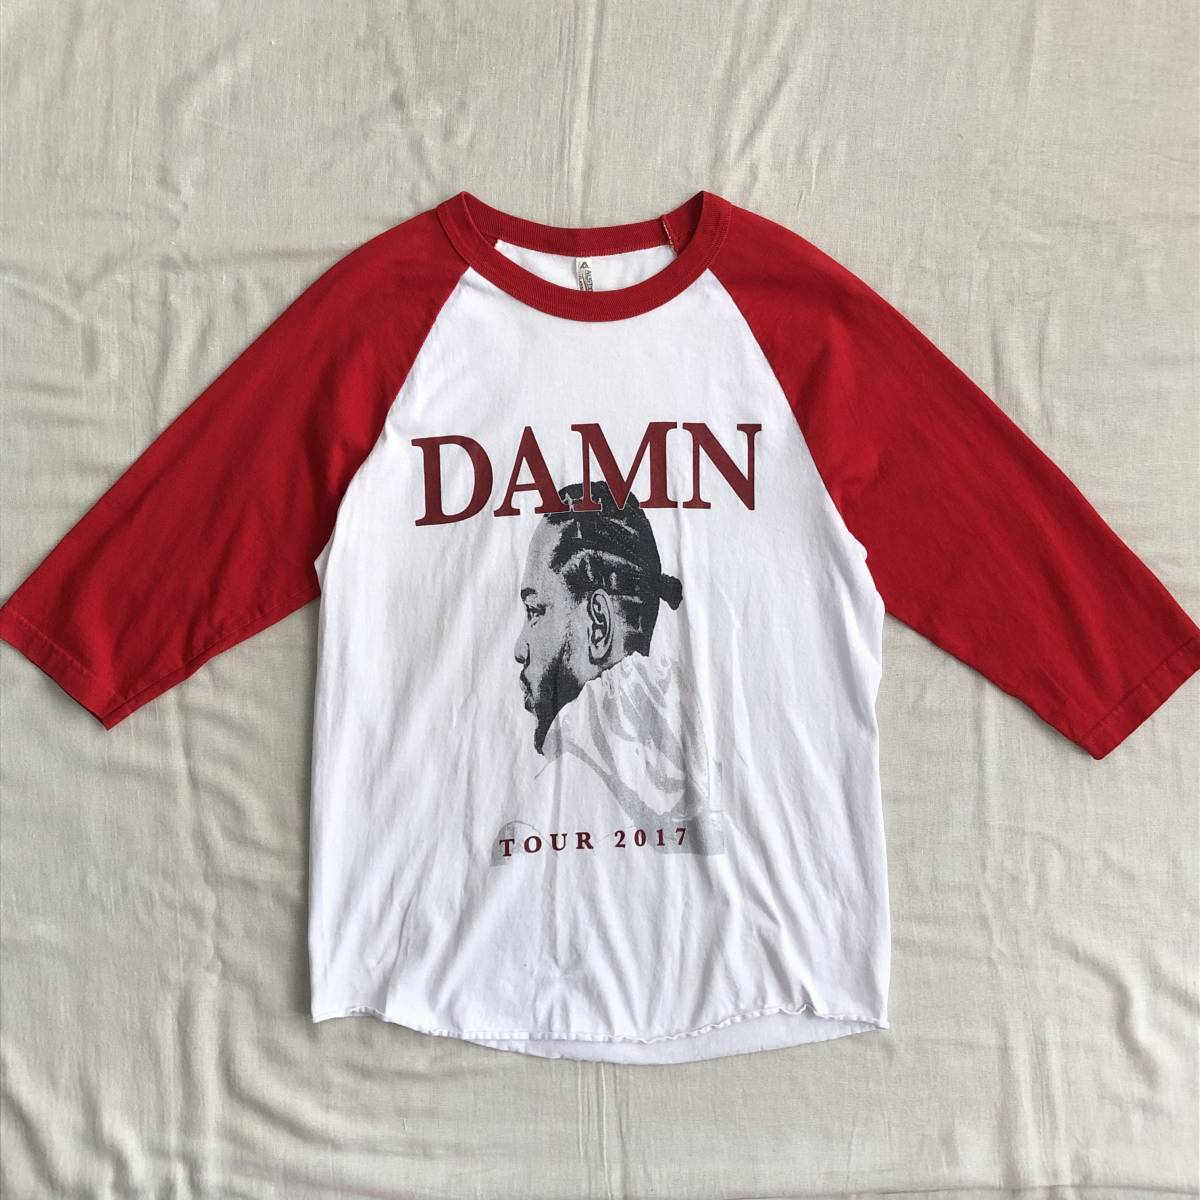 KENDRICK LAMAR [DAMN.TOUR 2017] ケンドリックラマー ベースボールTee WHITE/RED M マーチTee マーチャンダイズ_画像1